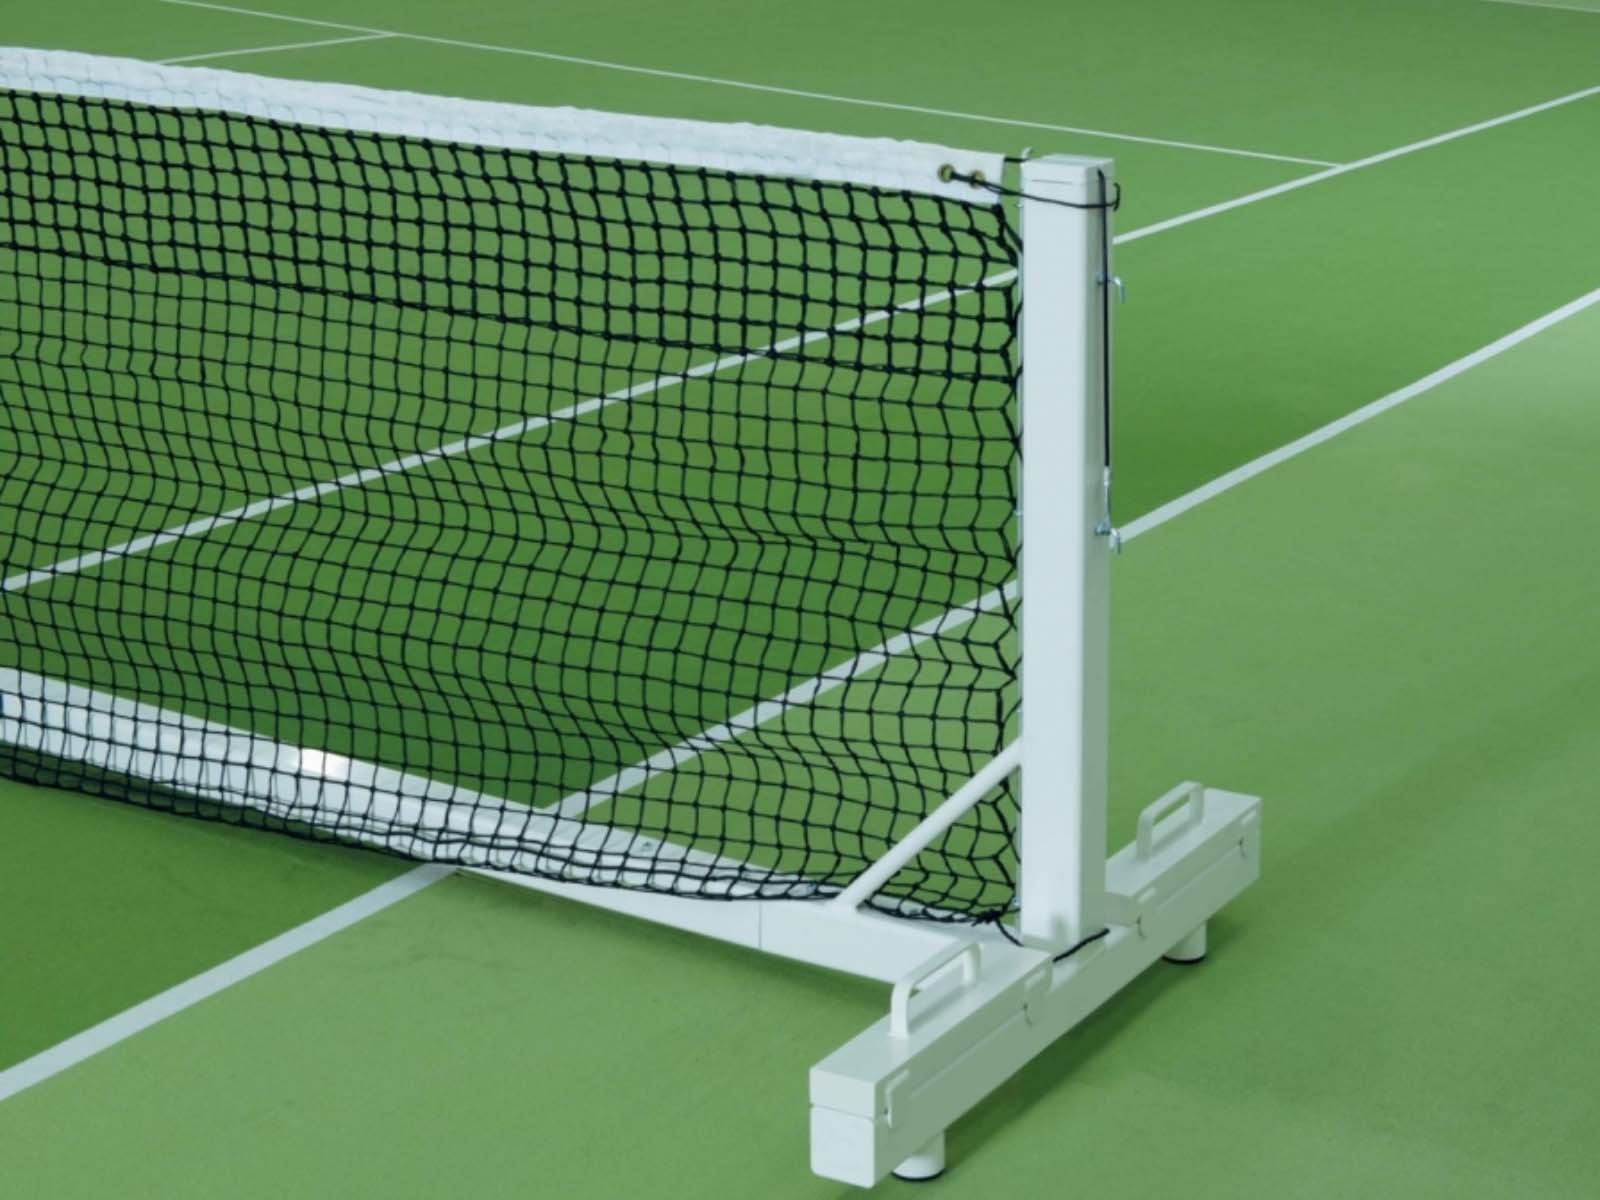 Купить сетку для тенниса. Court Royal теннисная сетка для тенниса. Сетка теннисная Court Royal tn20 (корт Роял, тн20) (черная). Теннисная сетка Торнео. Сборная теннисная стенка-сетка har-Tru.